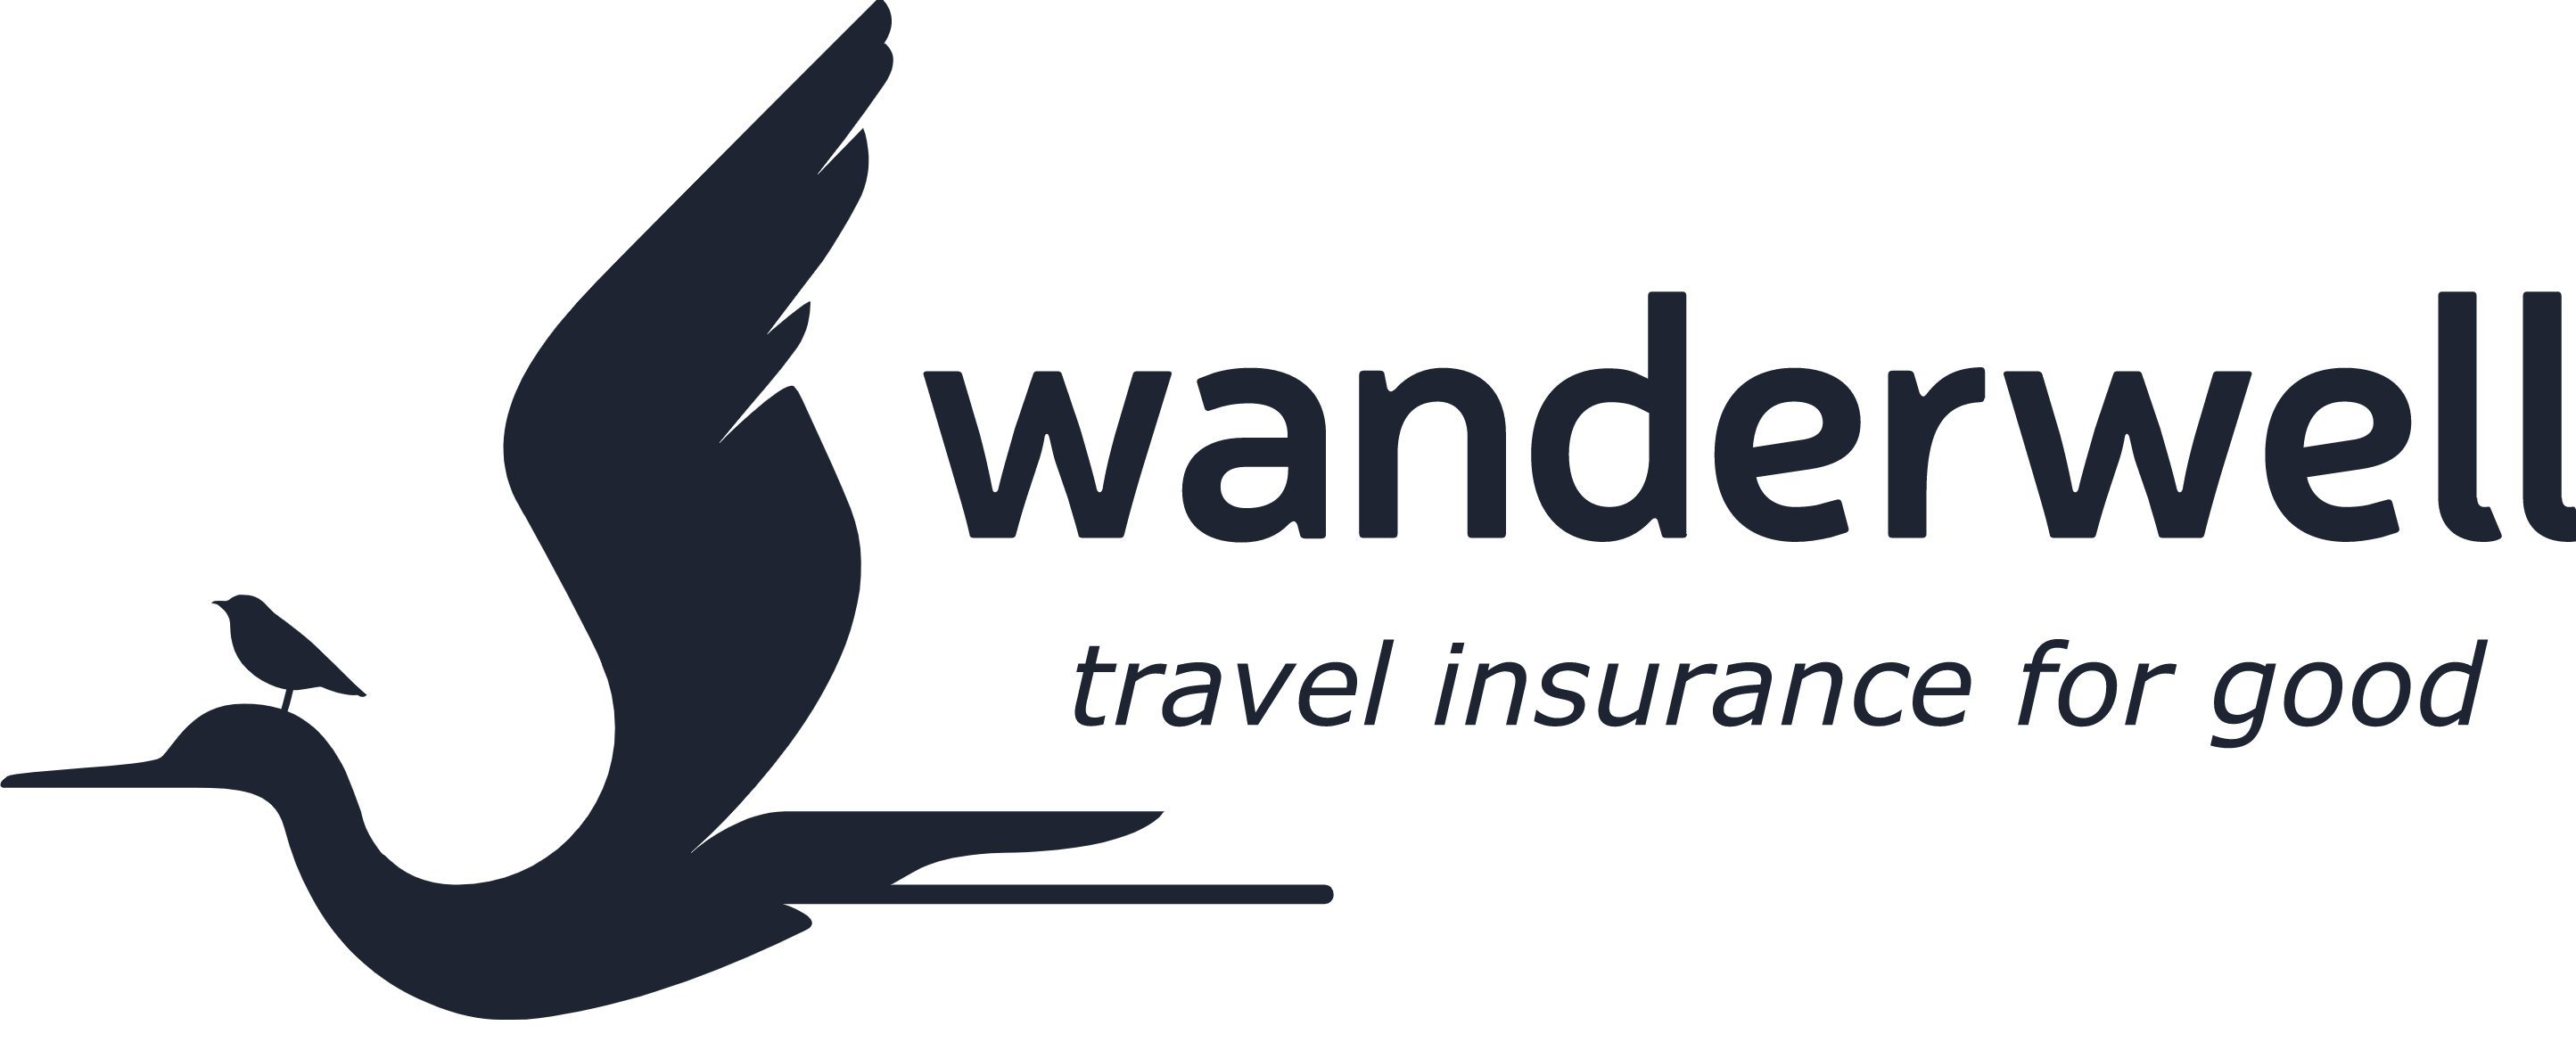 Wanderwell logo.png